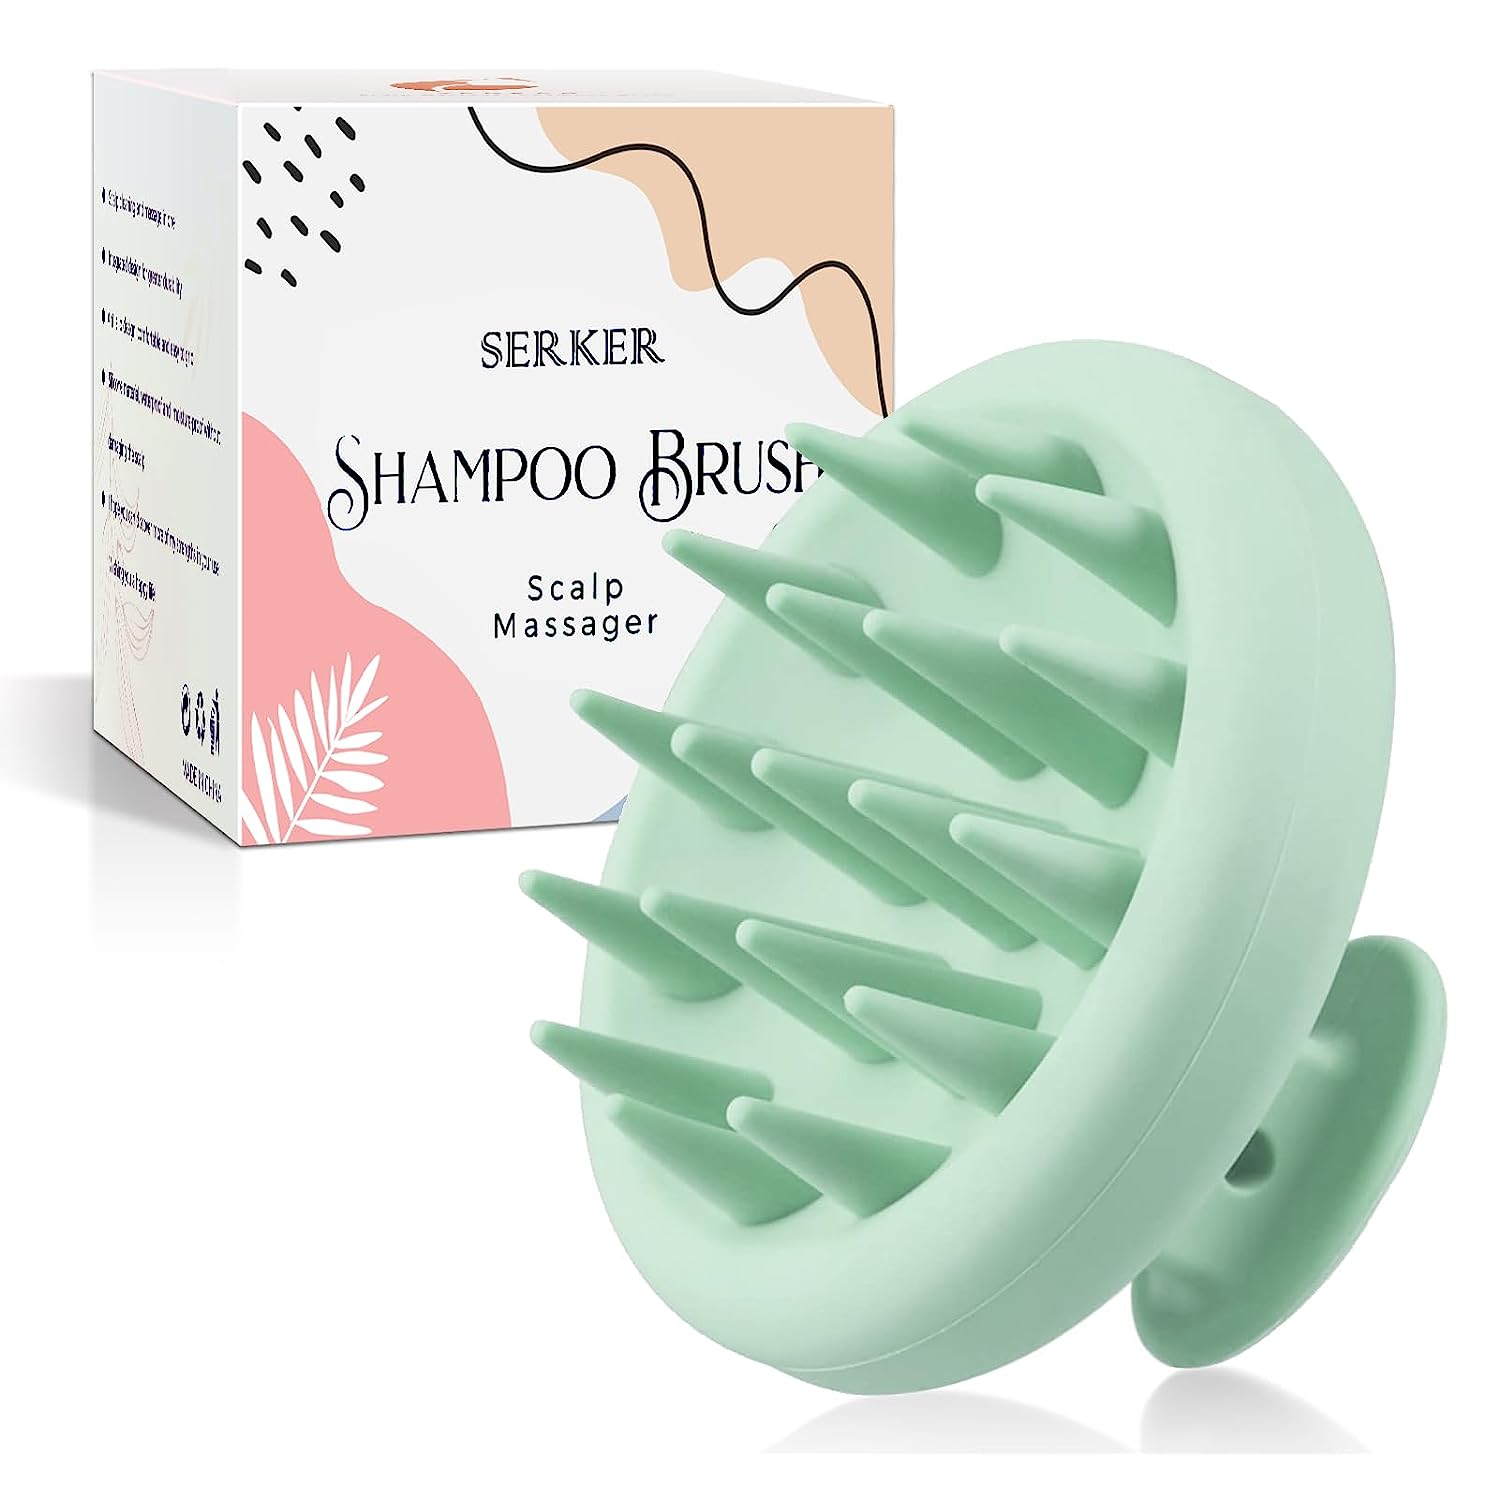 Serker Scalp Massage Brush, Shampoo Brush, Silicone Shampoo Hair Brush, Scalp Massager for Exoliating and Stimulating Hair Growth, Dandruff Reduction, Head Massage (Fir Green)